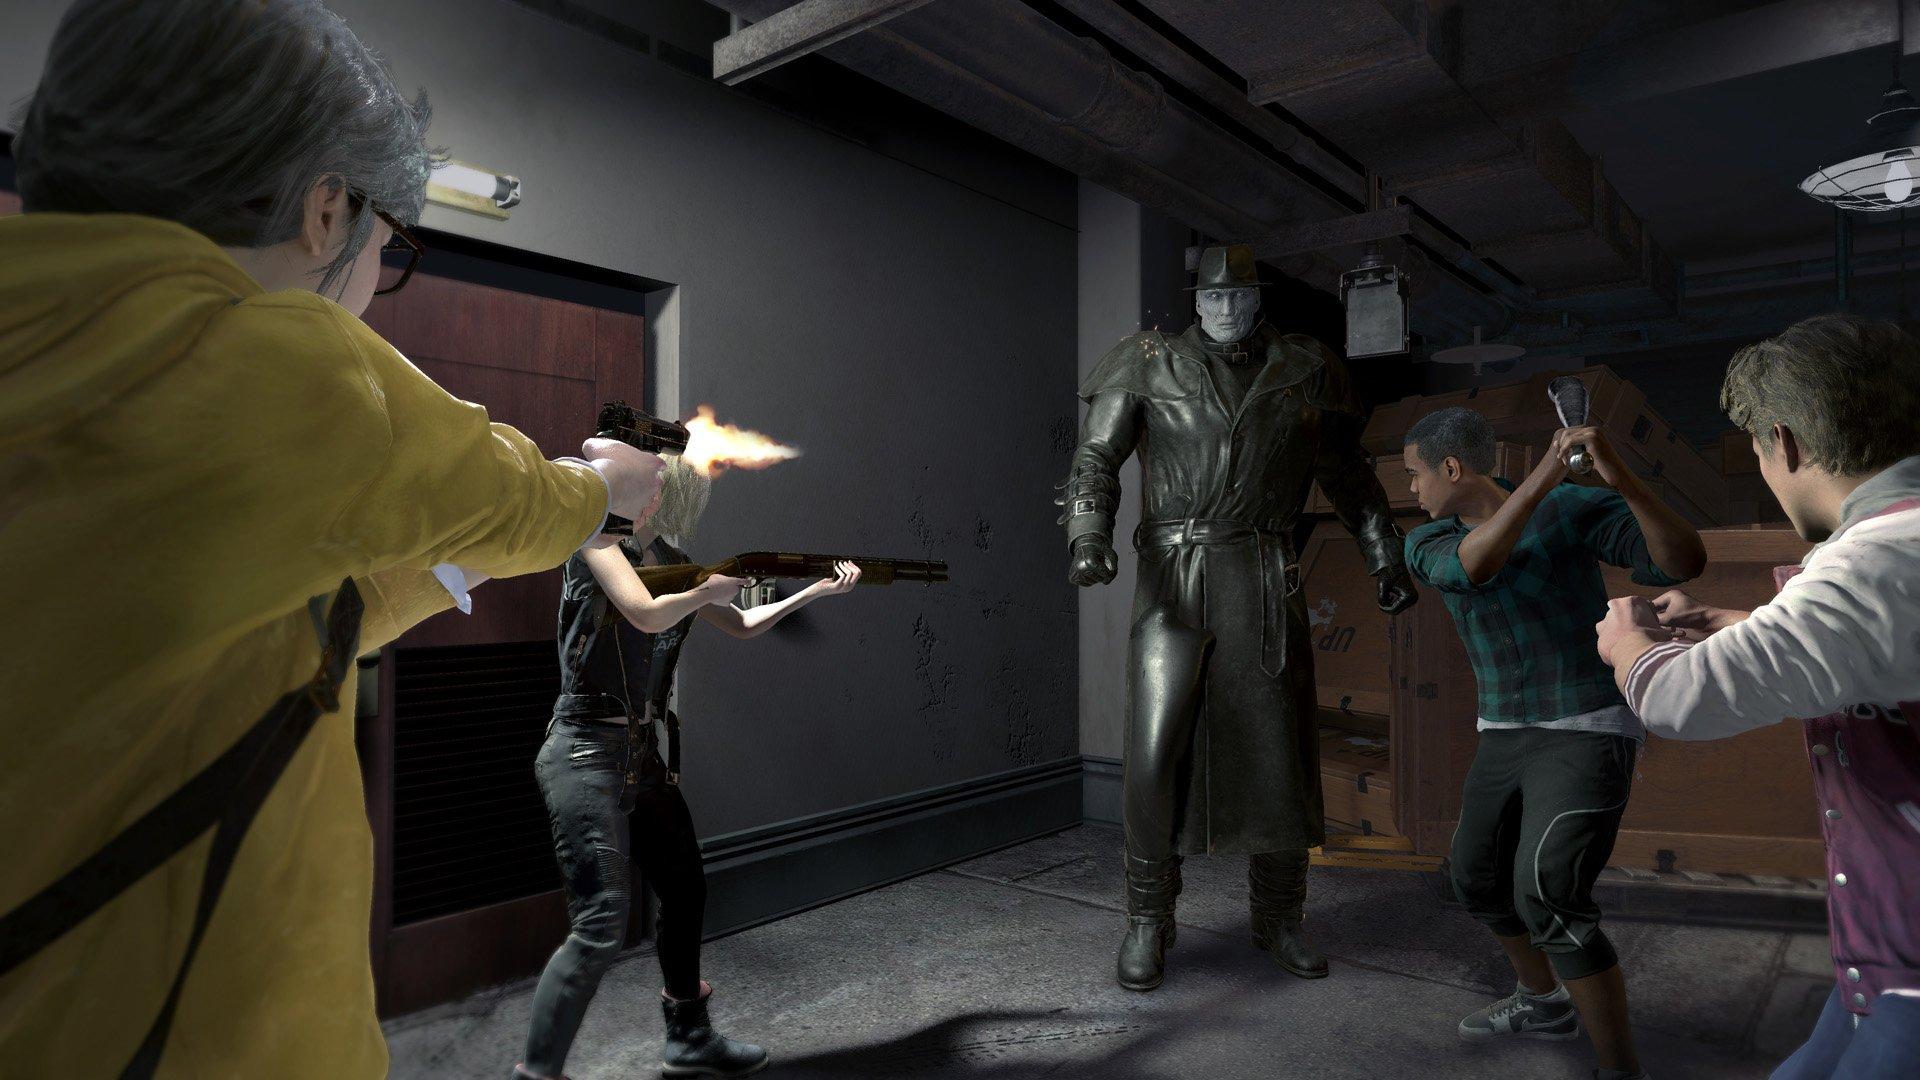 Resident Evil 2 - Xbox One (digital) : Target